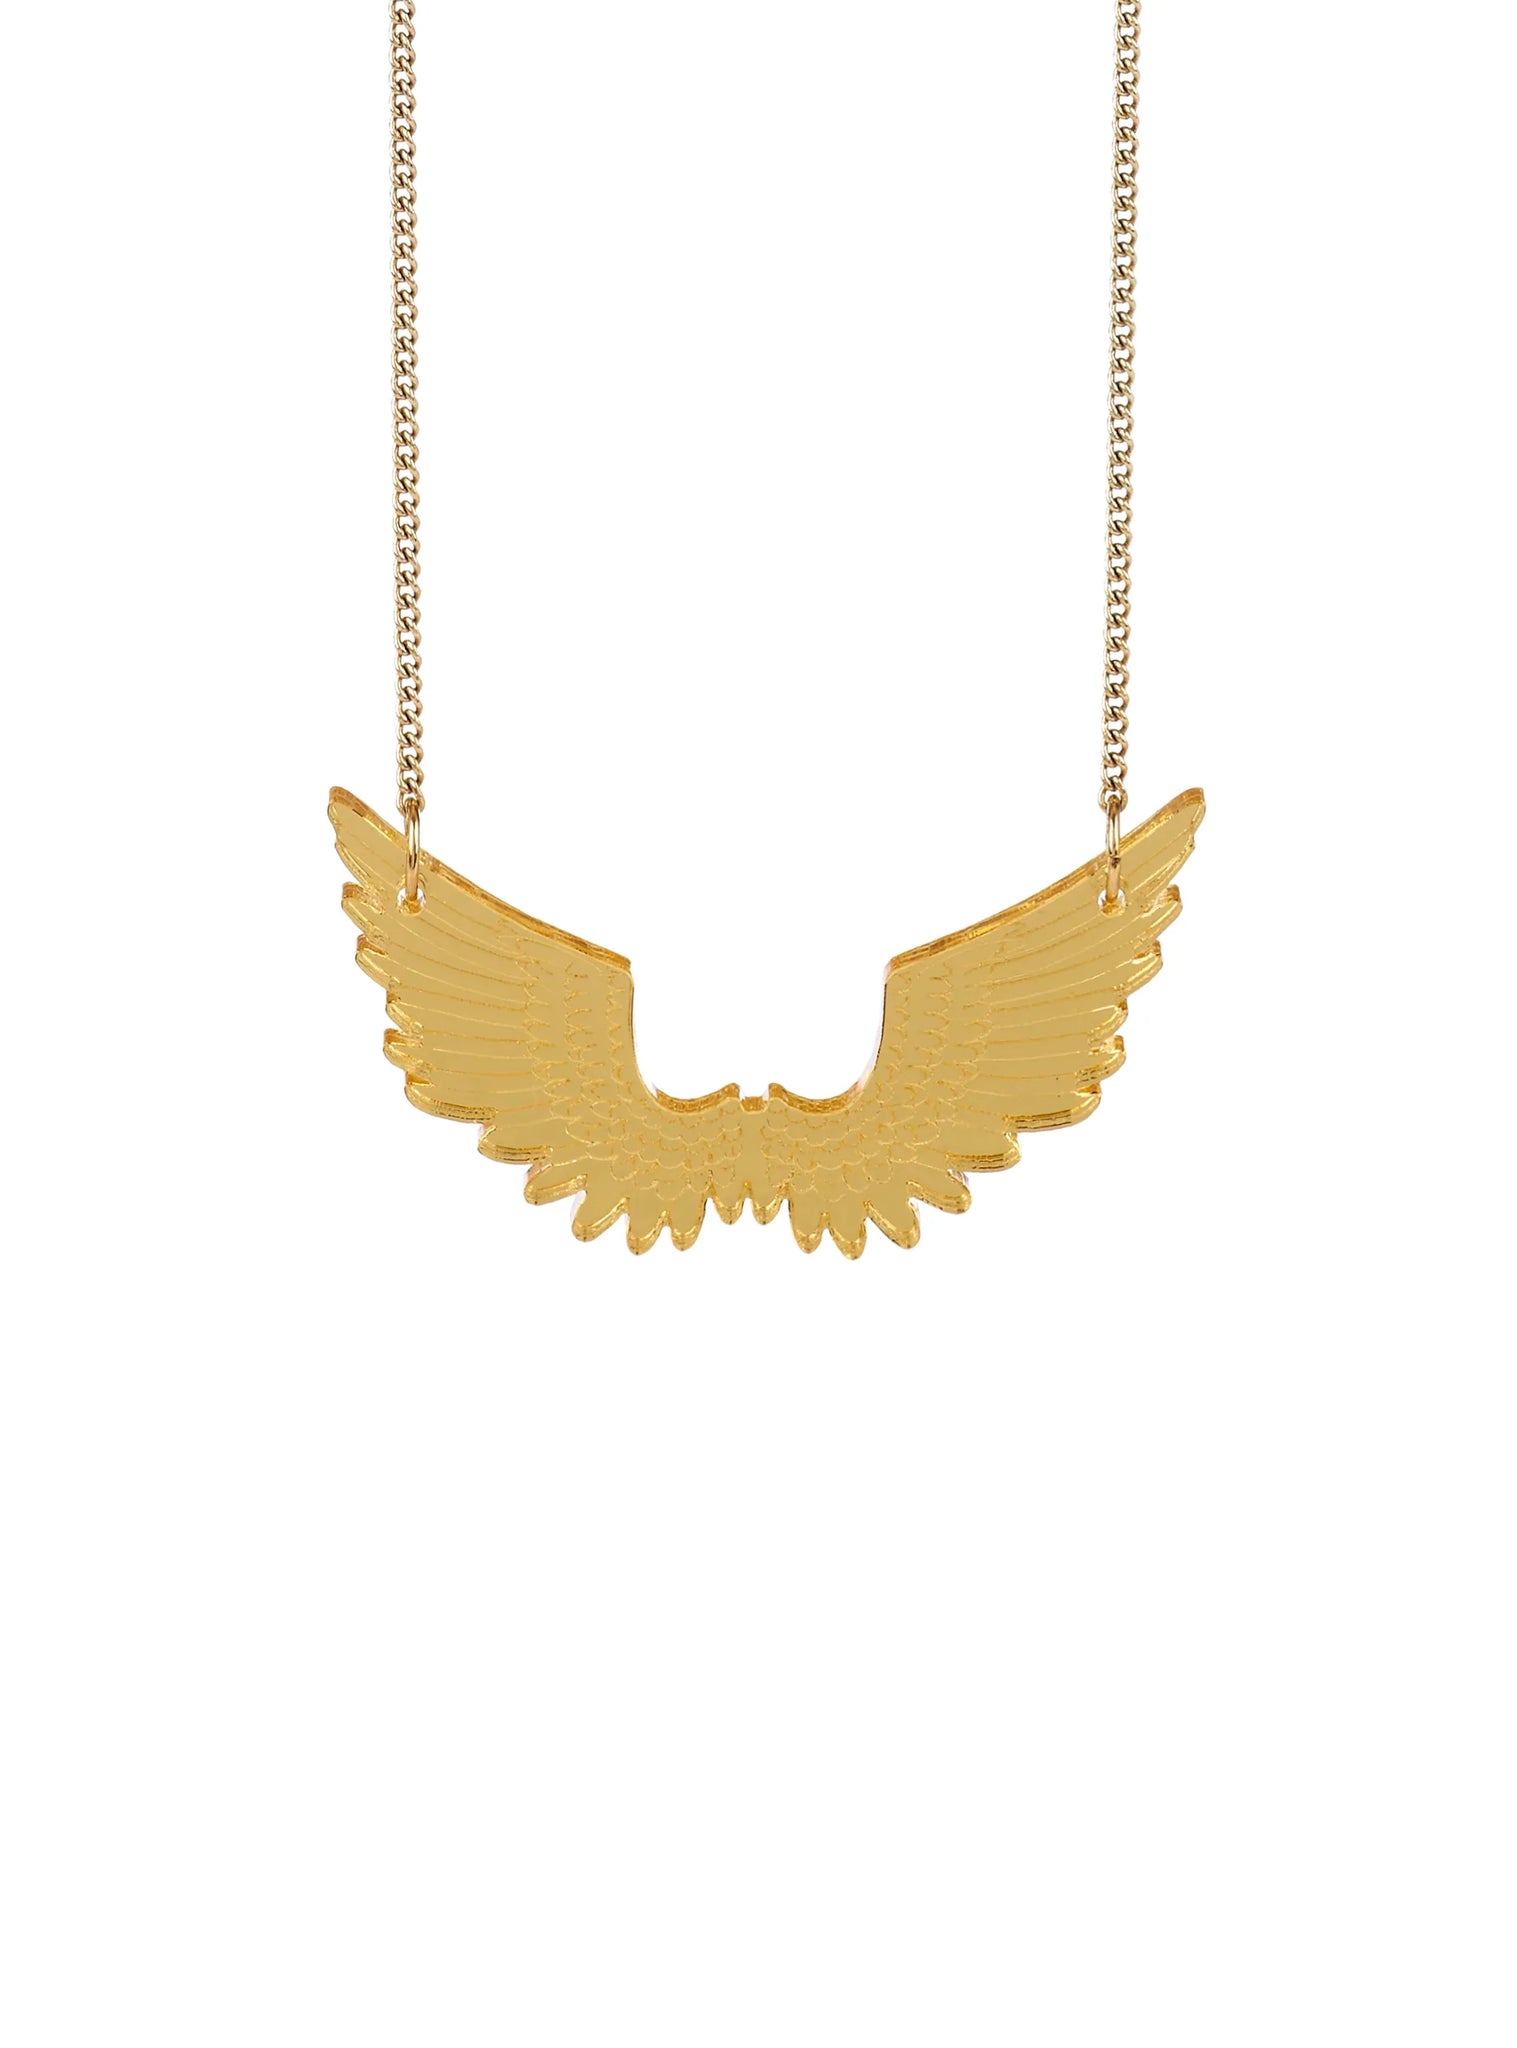 Tatty Devine Pegasus mini gold necklace - Imeldas Shoes Norwich